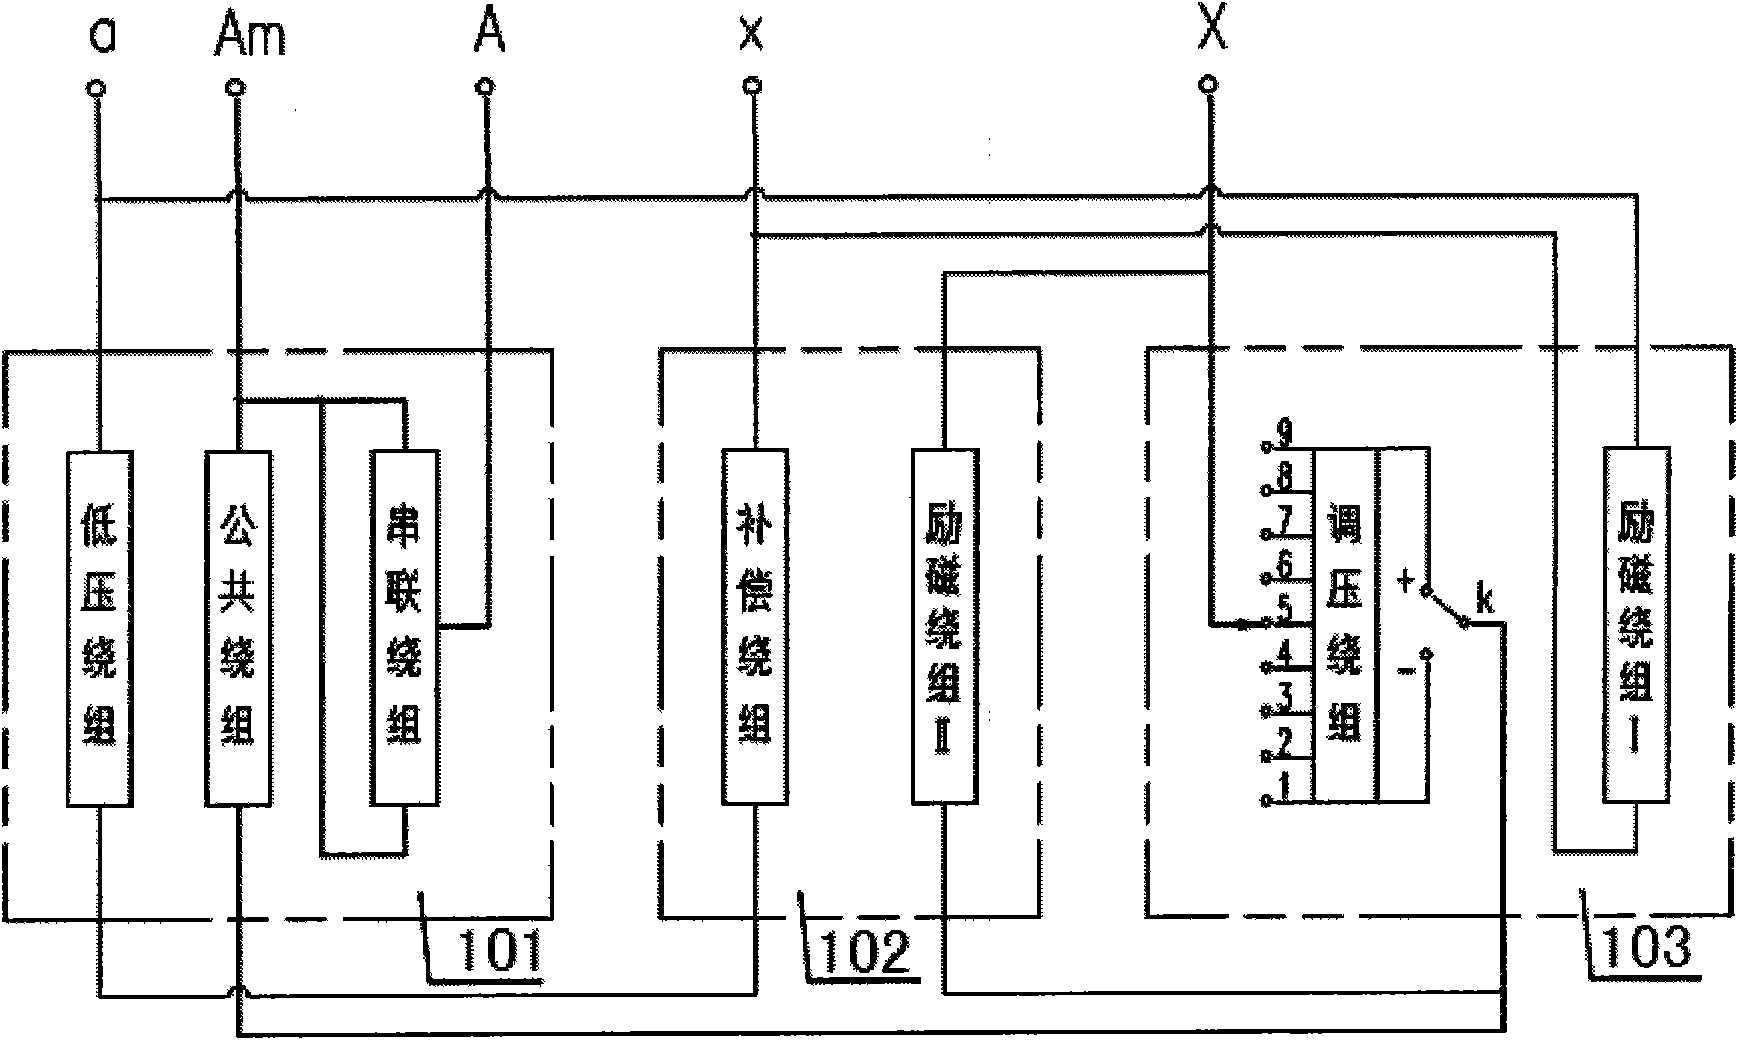 Autotransformer with low-voltage compensation